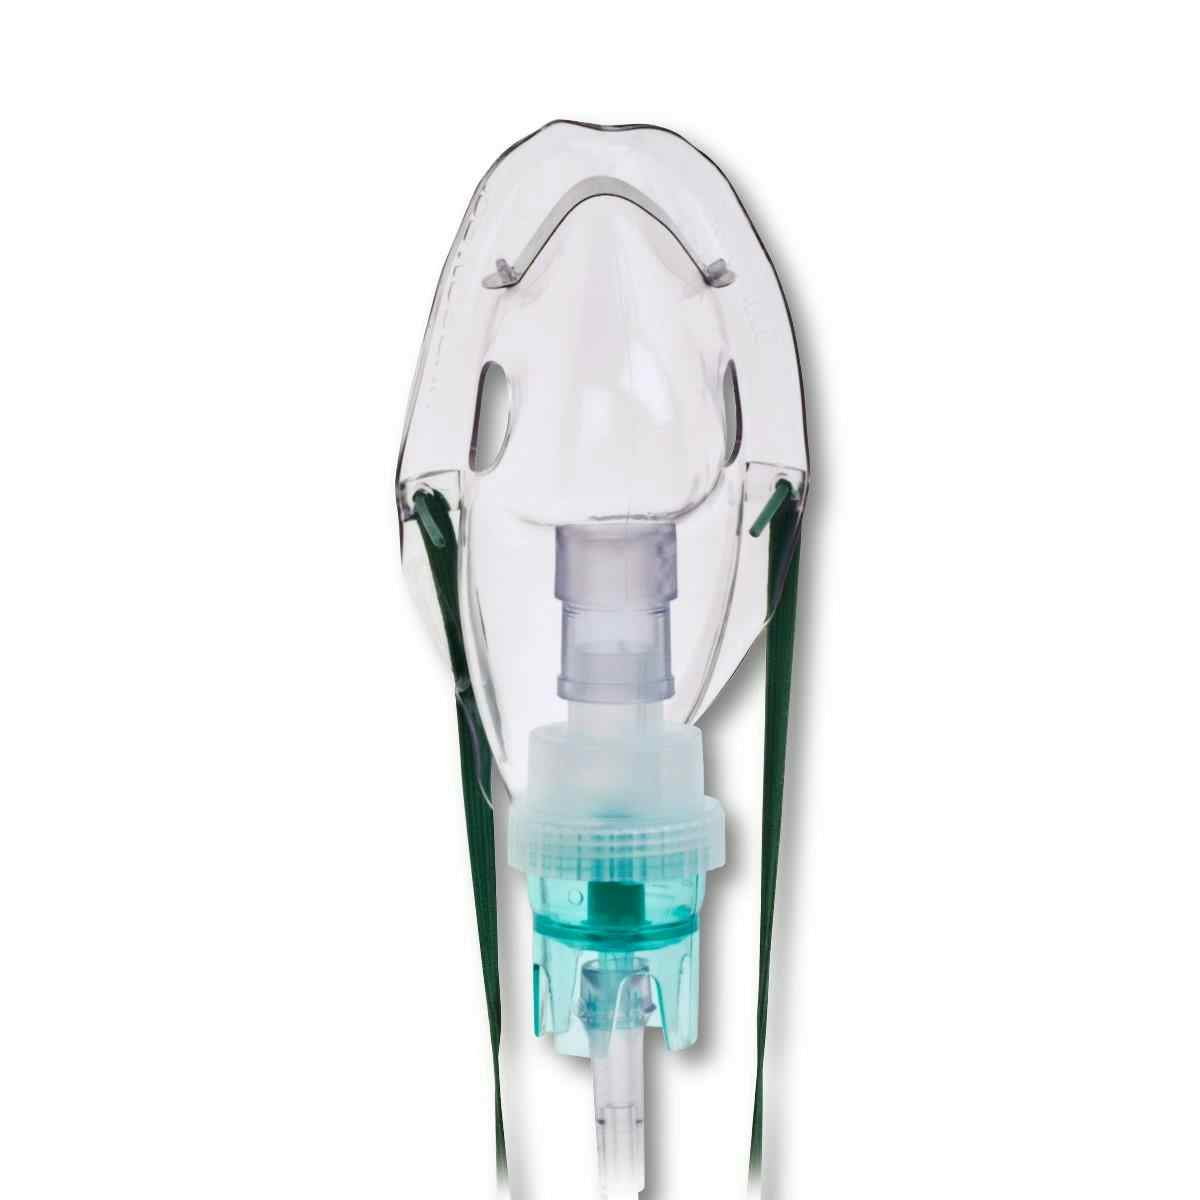 Medline Up-Draft II Opti-Neb Nebulizer, 7' Star Lumen Oxygen Tubing, Standard Connector, Elongated Adult Mask